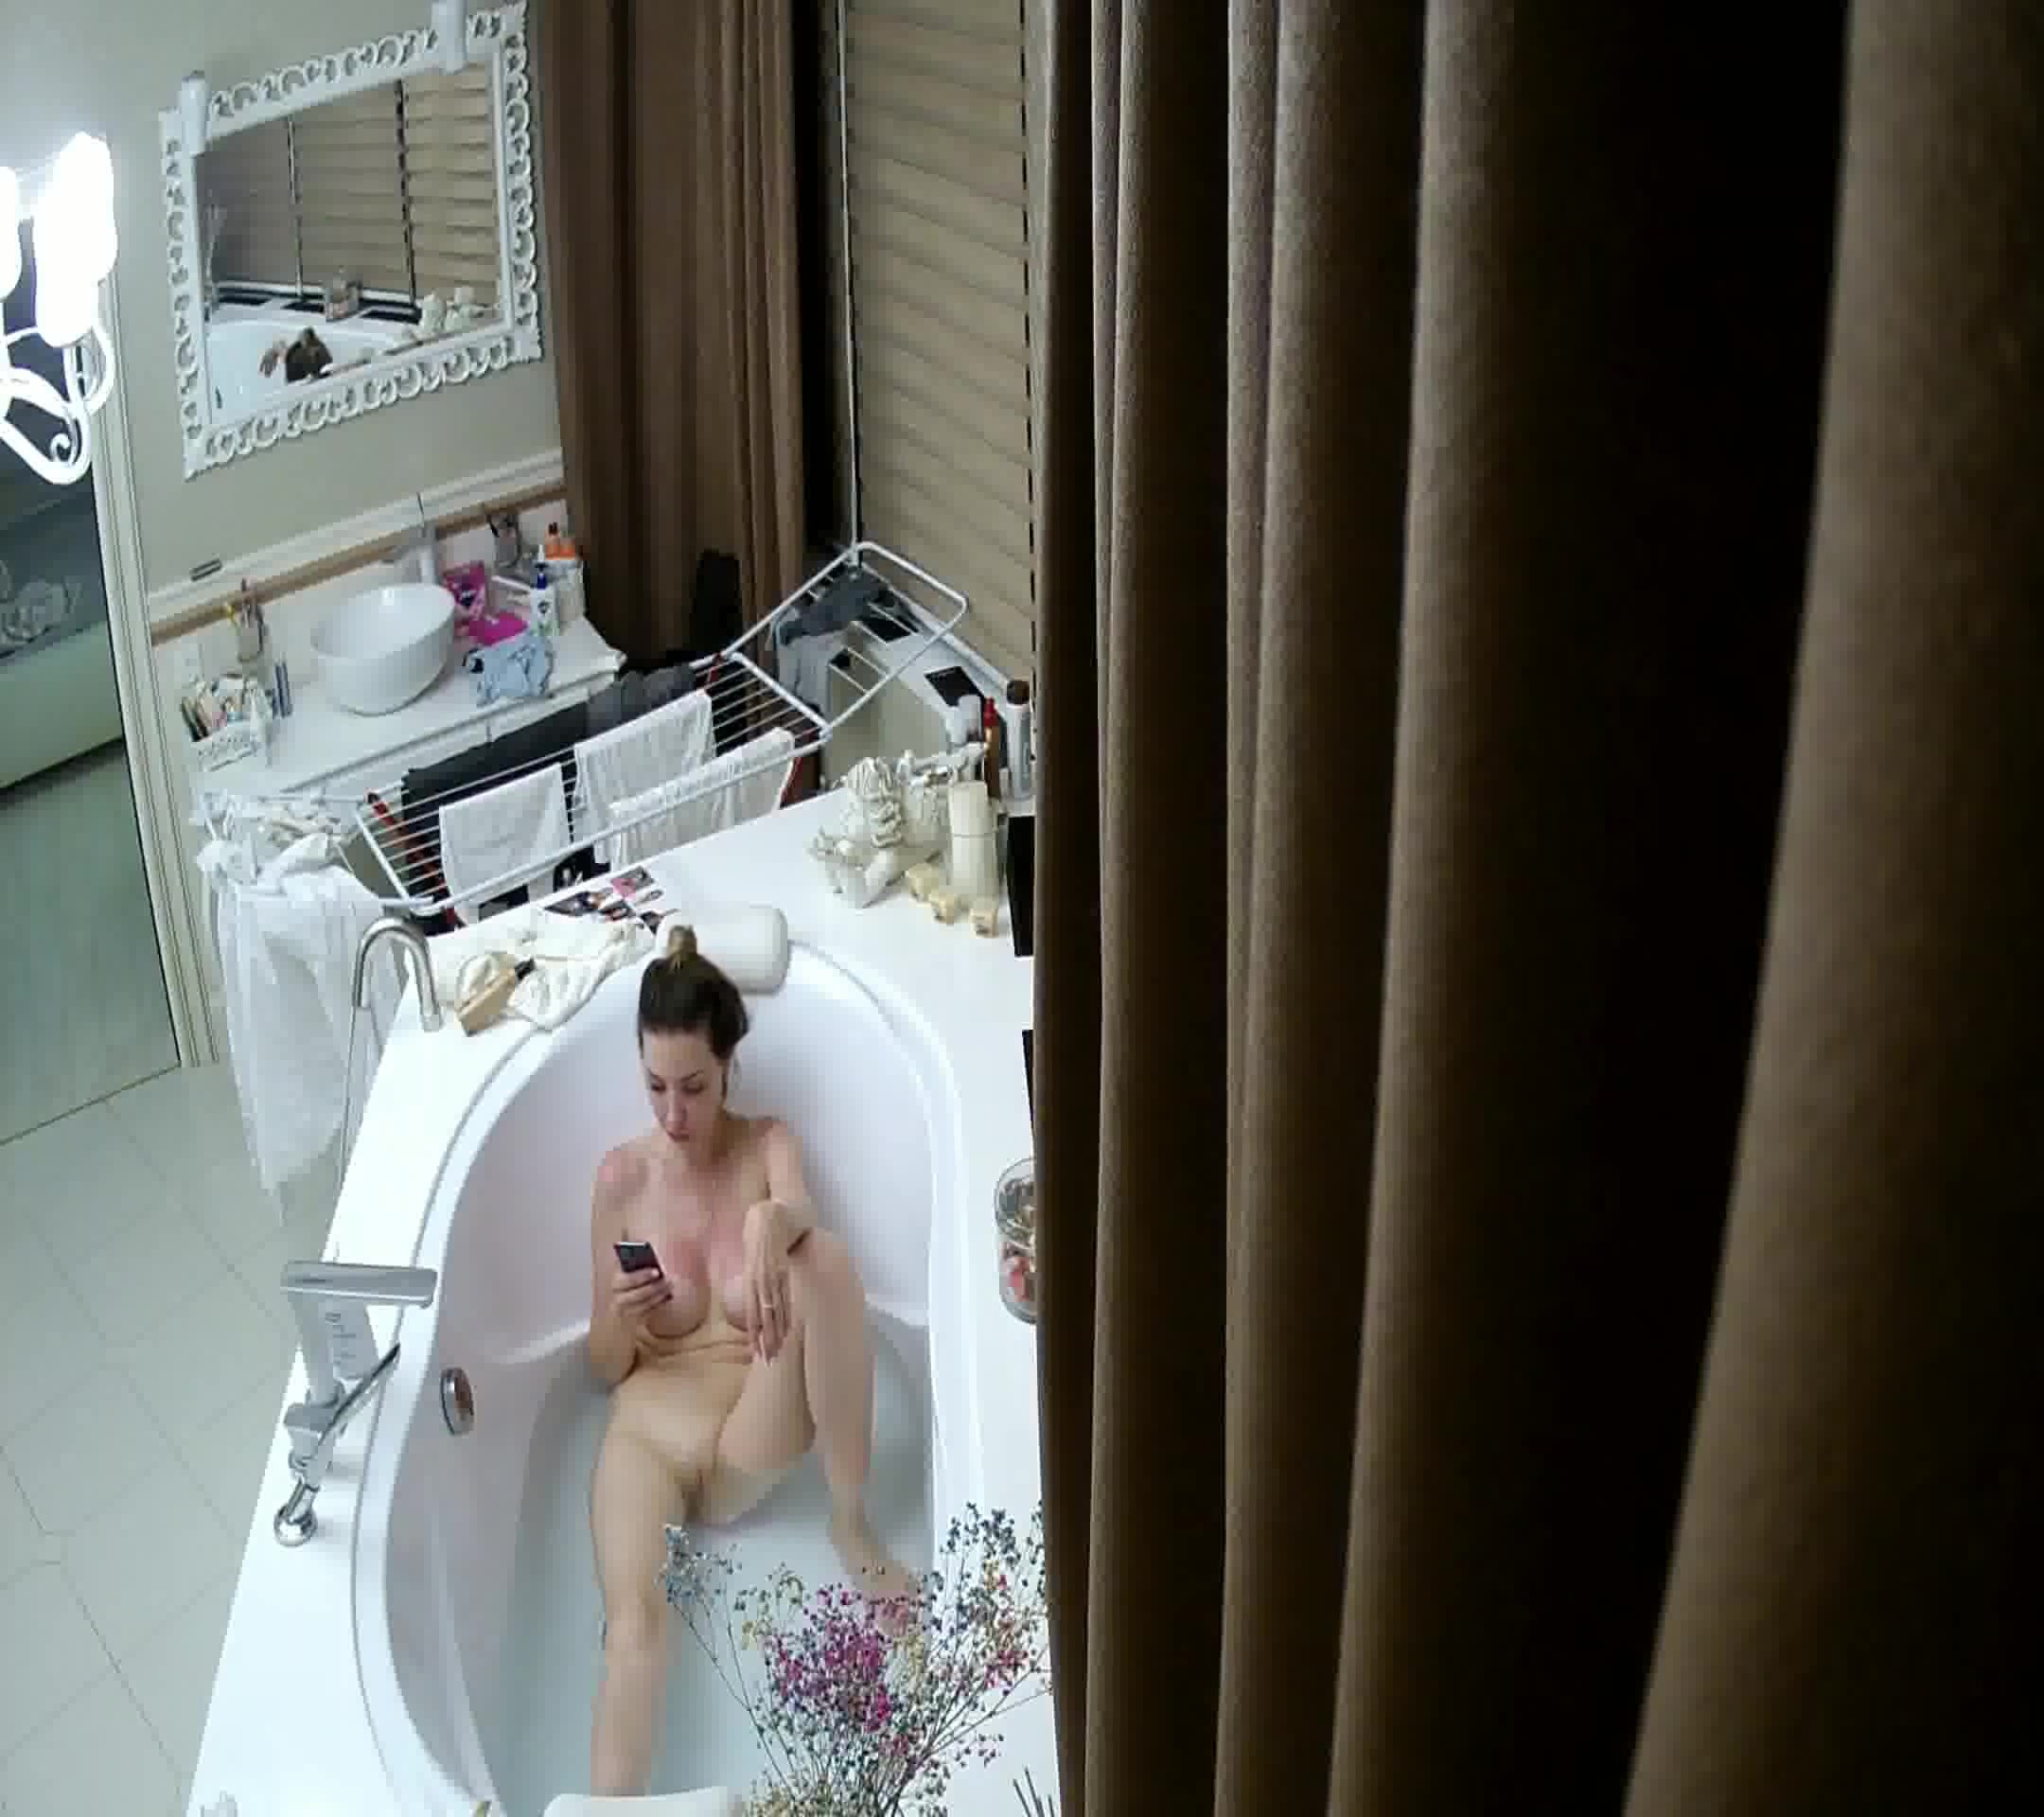 Hot girl taking a bath on hidden camera 1 Sex Pic Hd